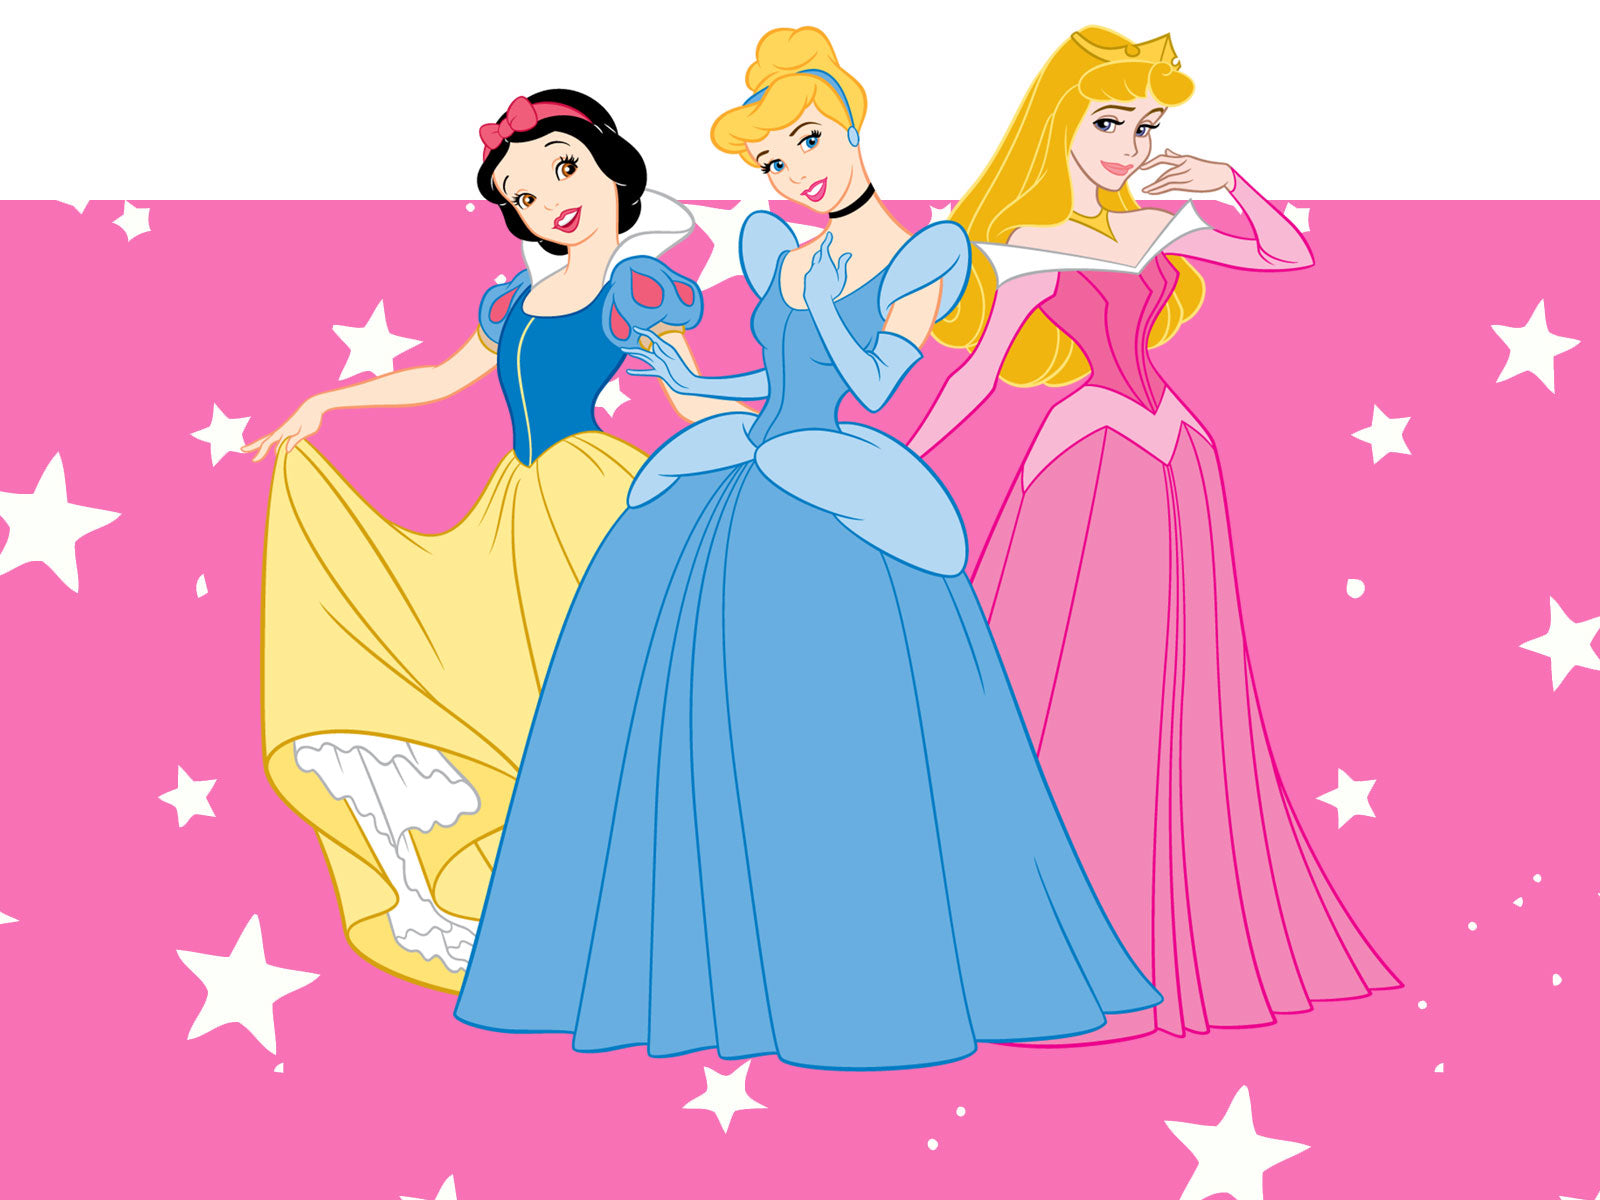 Disney Princess Shemale Porn - Official Disney Princess Nightwear | Girls Dresses & Pyjamas â€“ Character.com